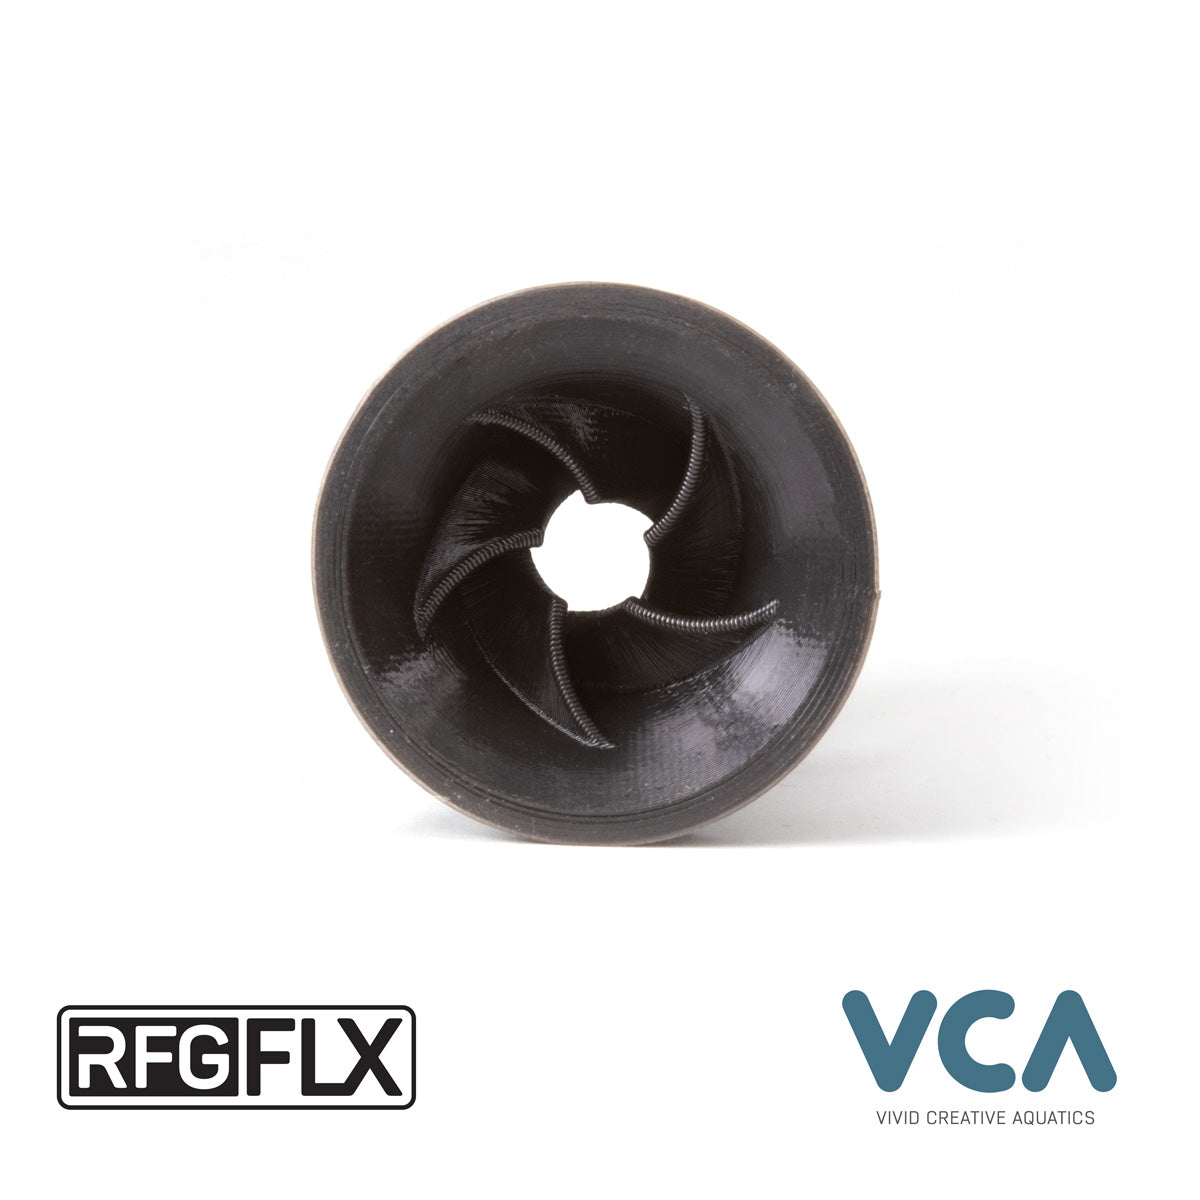 VCA 3/4 in Flex Series Random Flow Generator (RFG075-FLX)